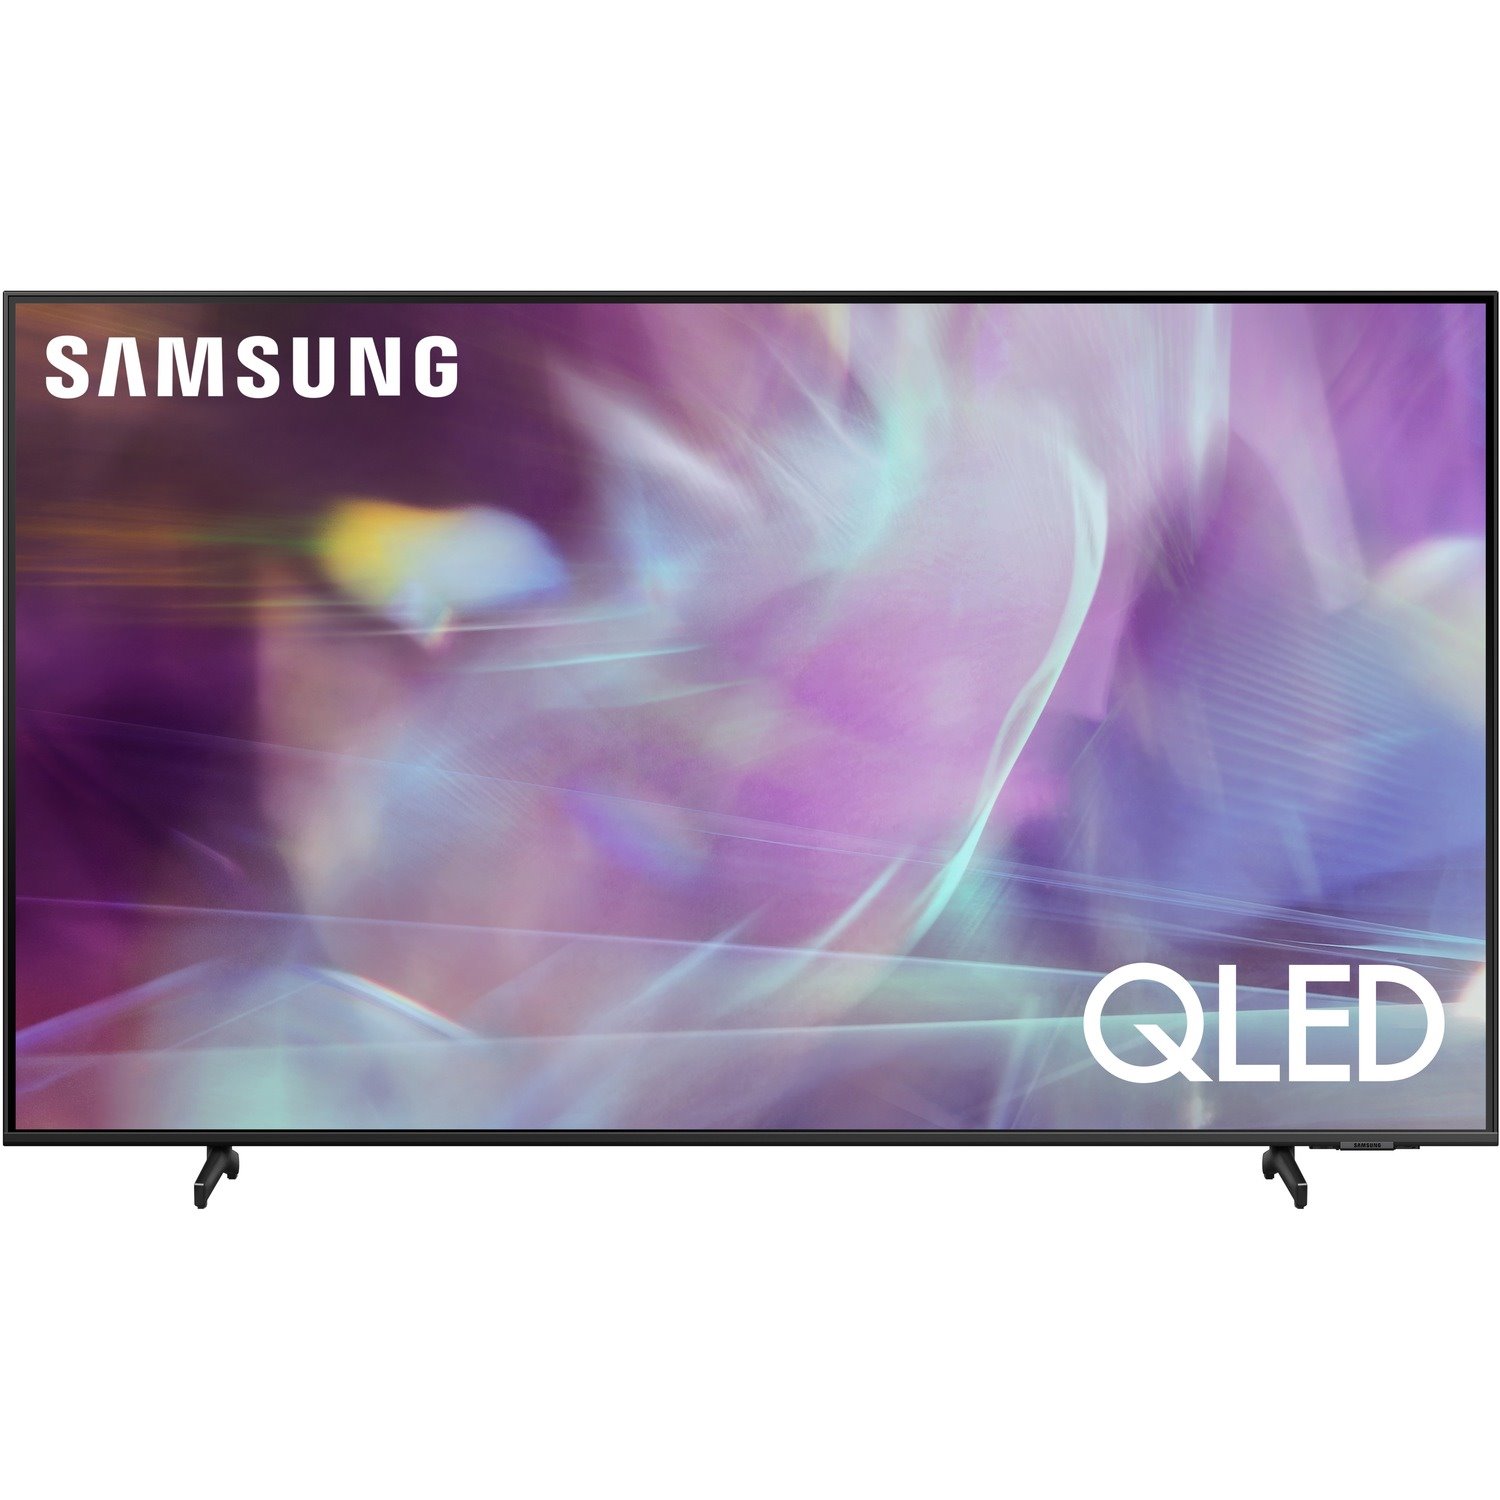 Samsung Q60A QN65Q60AAF 64.5" Smart LED-LCD TV - 4K UHDTV - Titan Gray, Sand Black